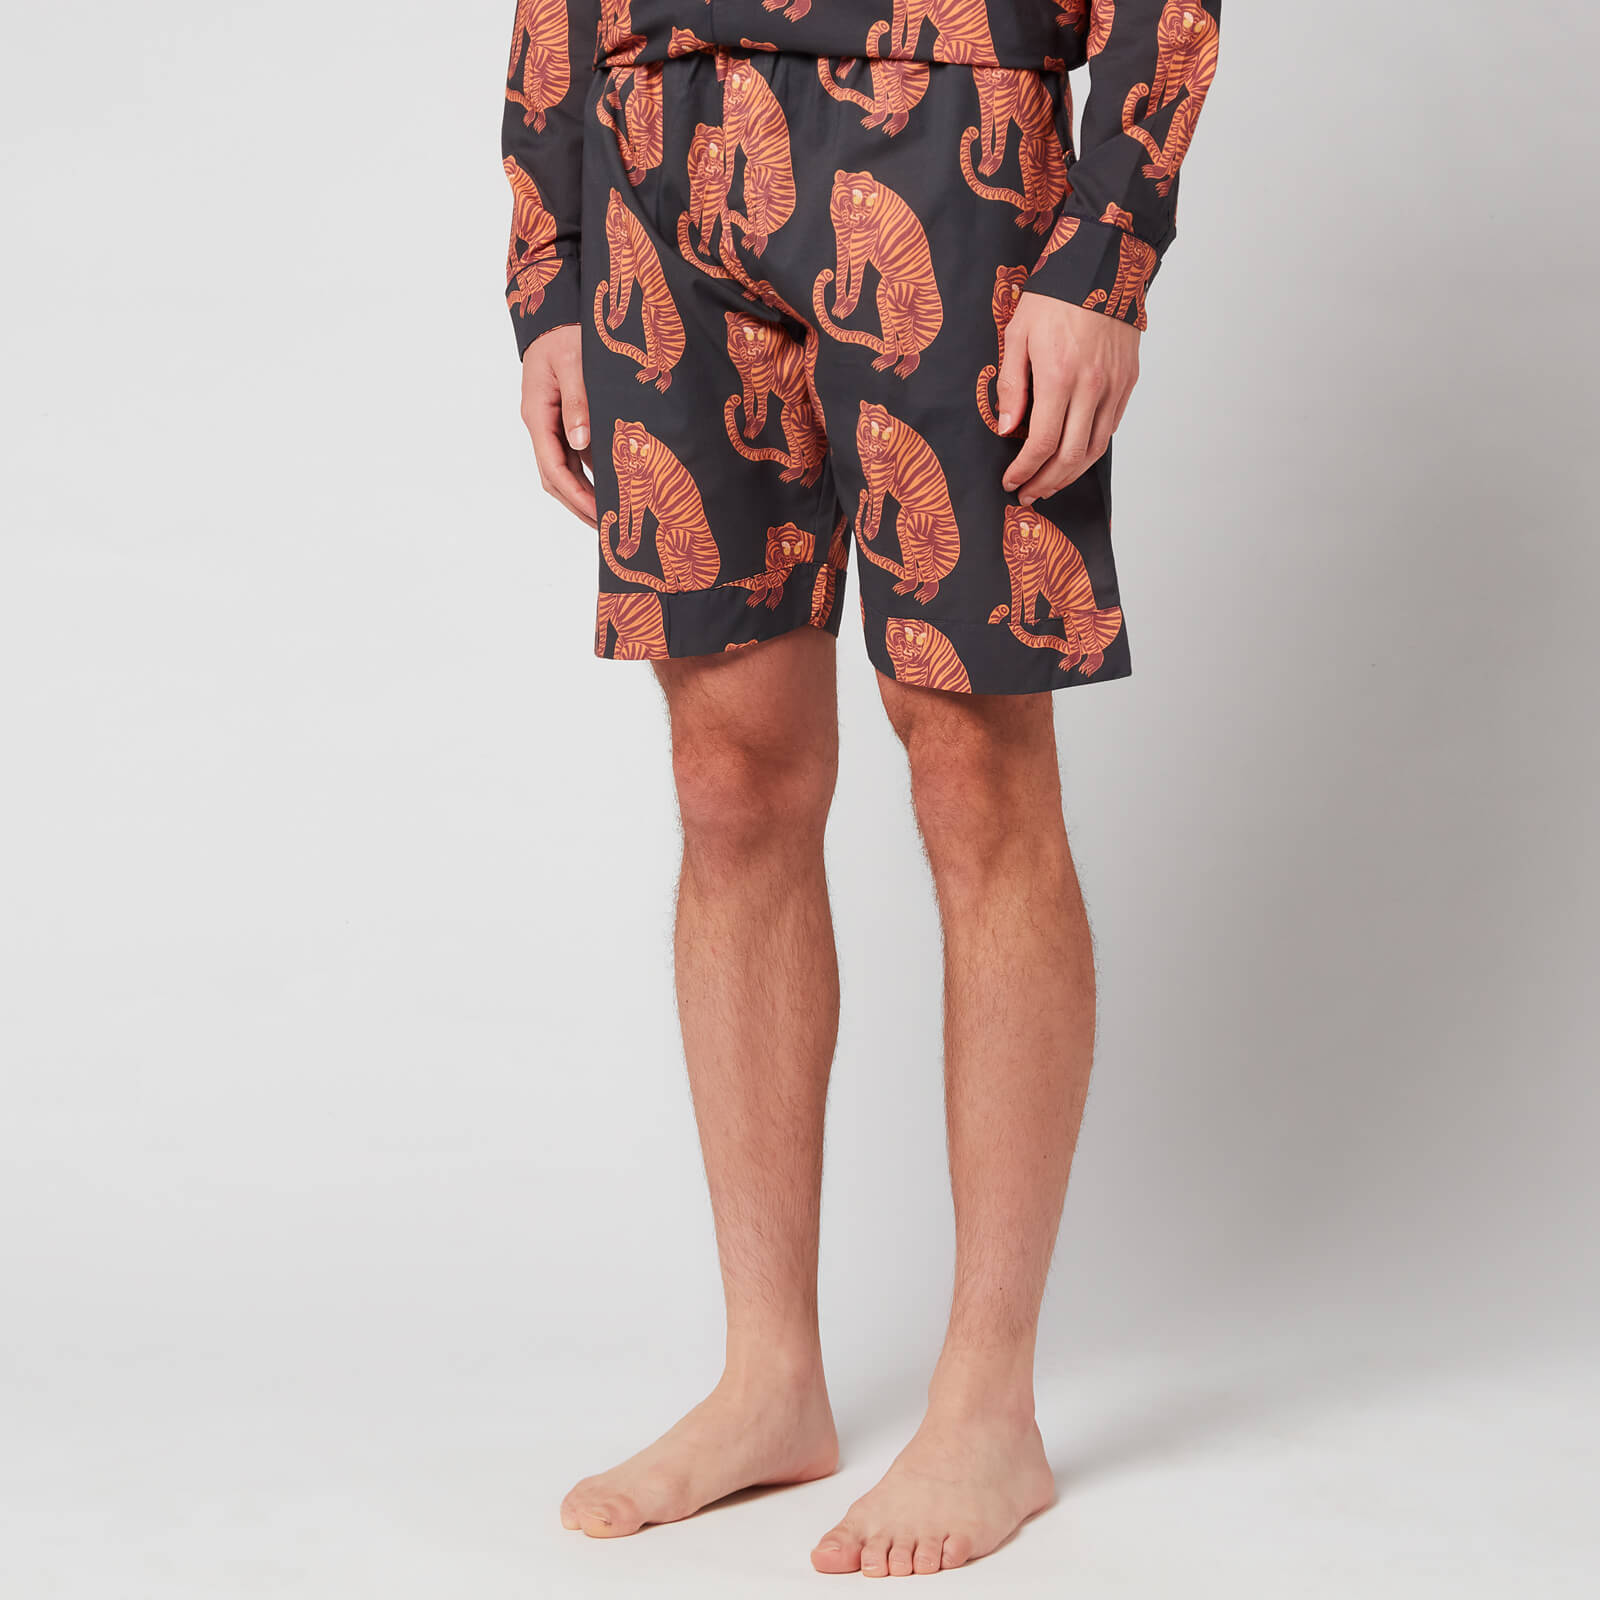 Desmond & Dempsey Men's Tiger Print Shorts - Black/Orange - S